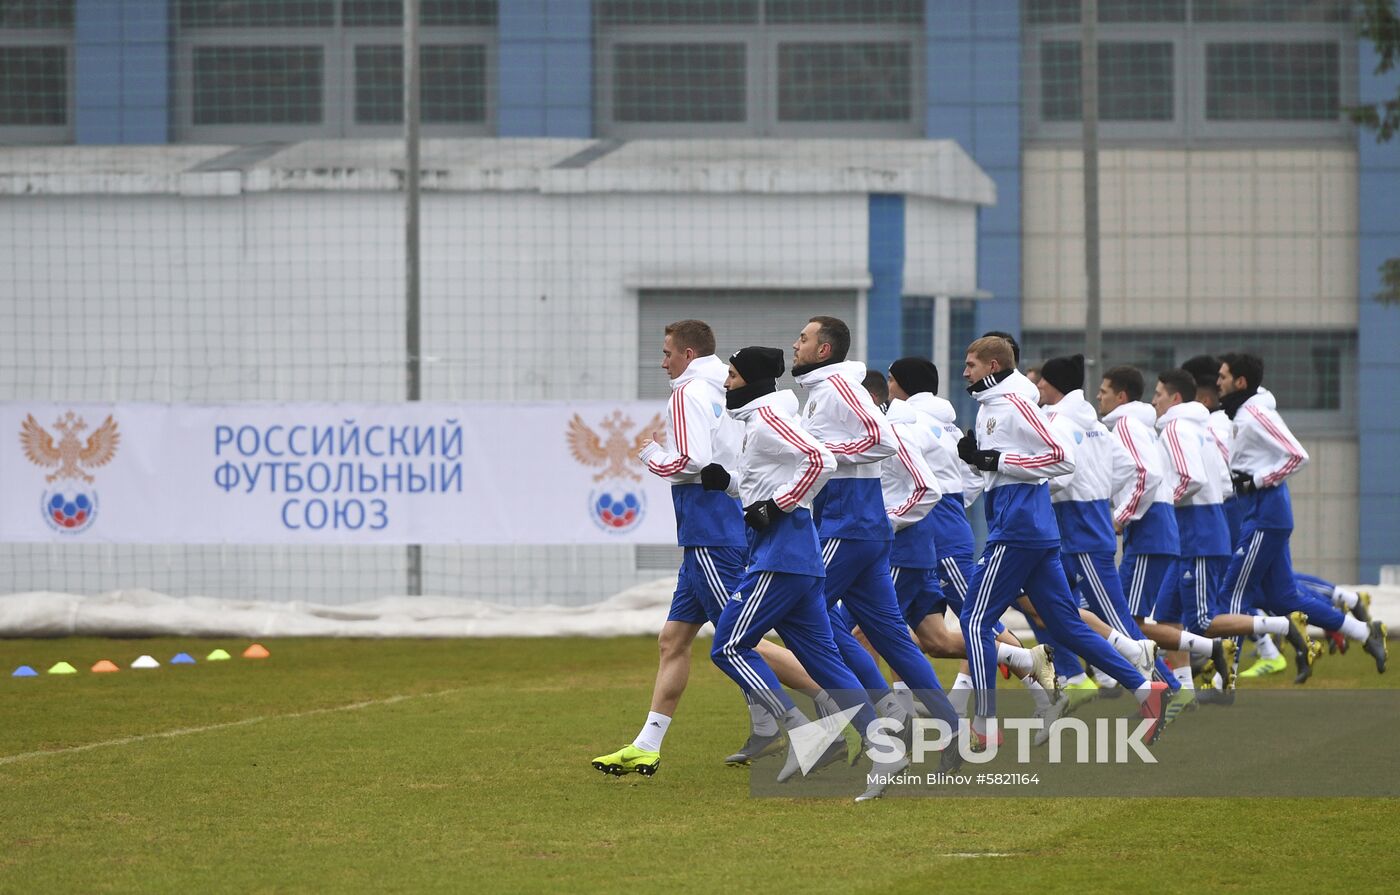 Russia Soccer Training